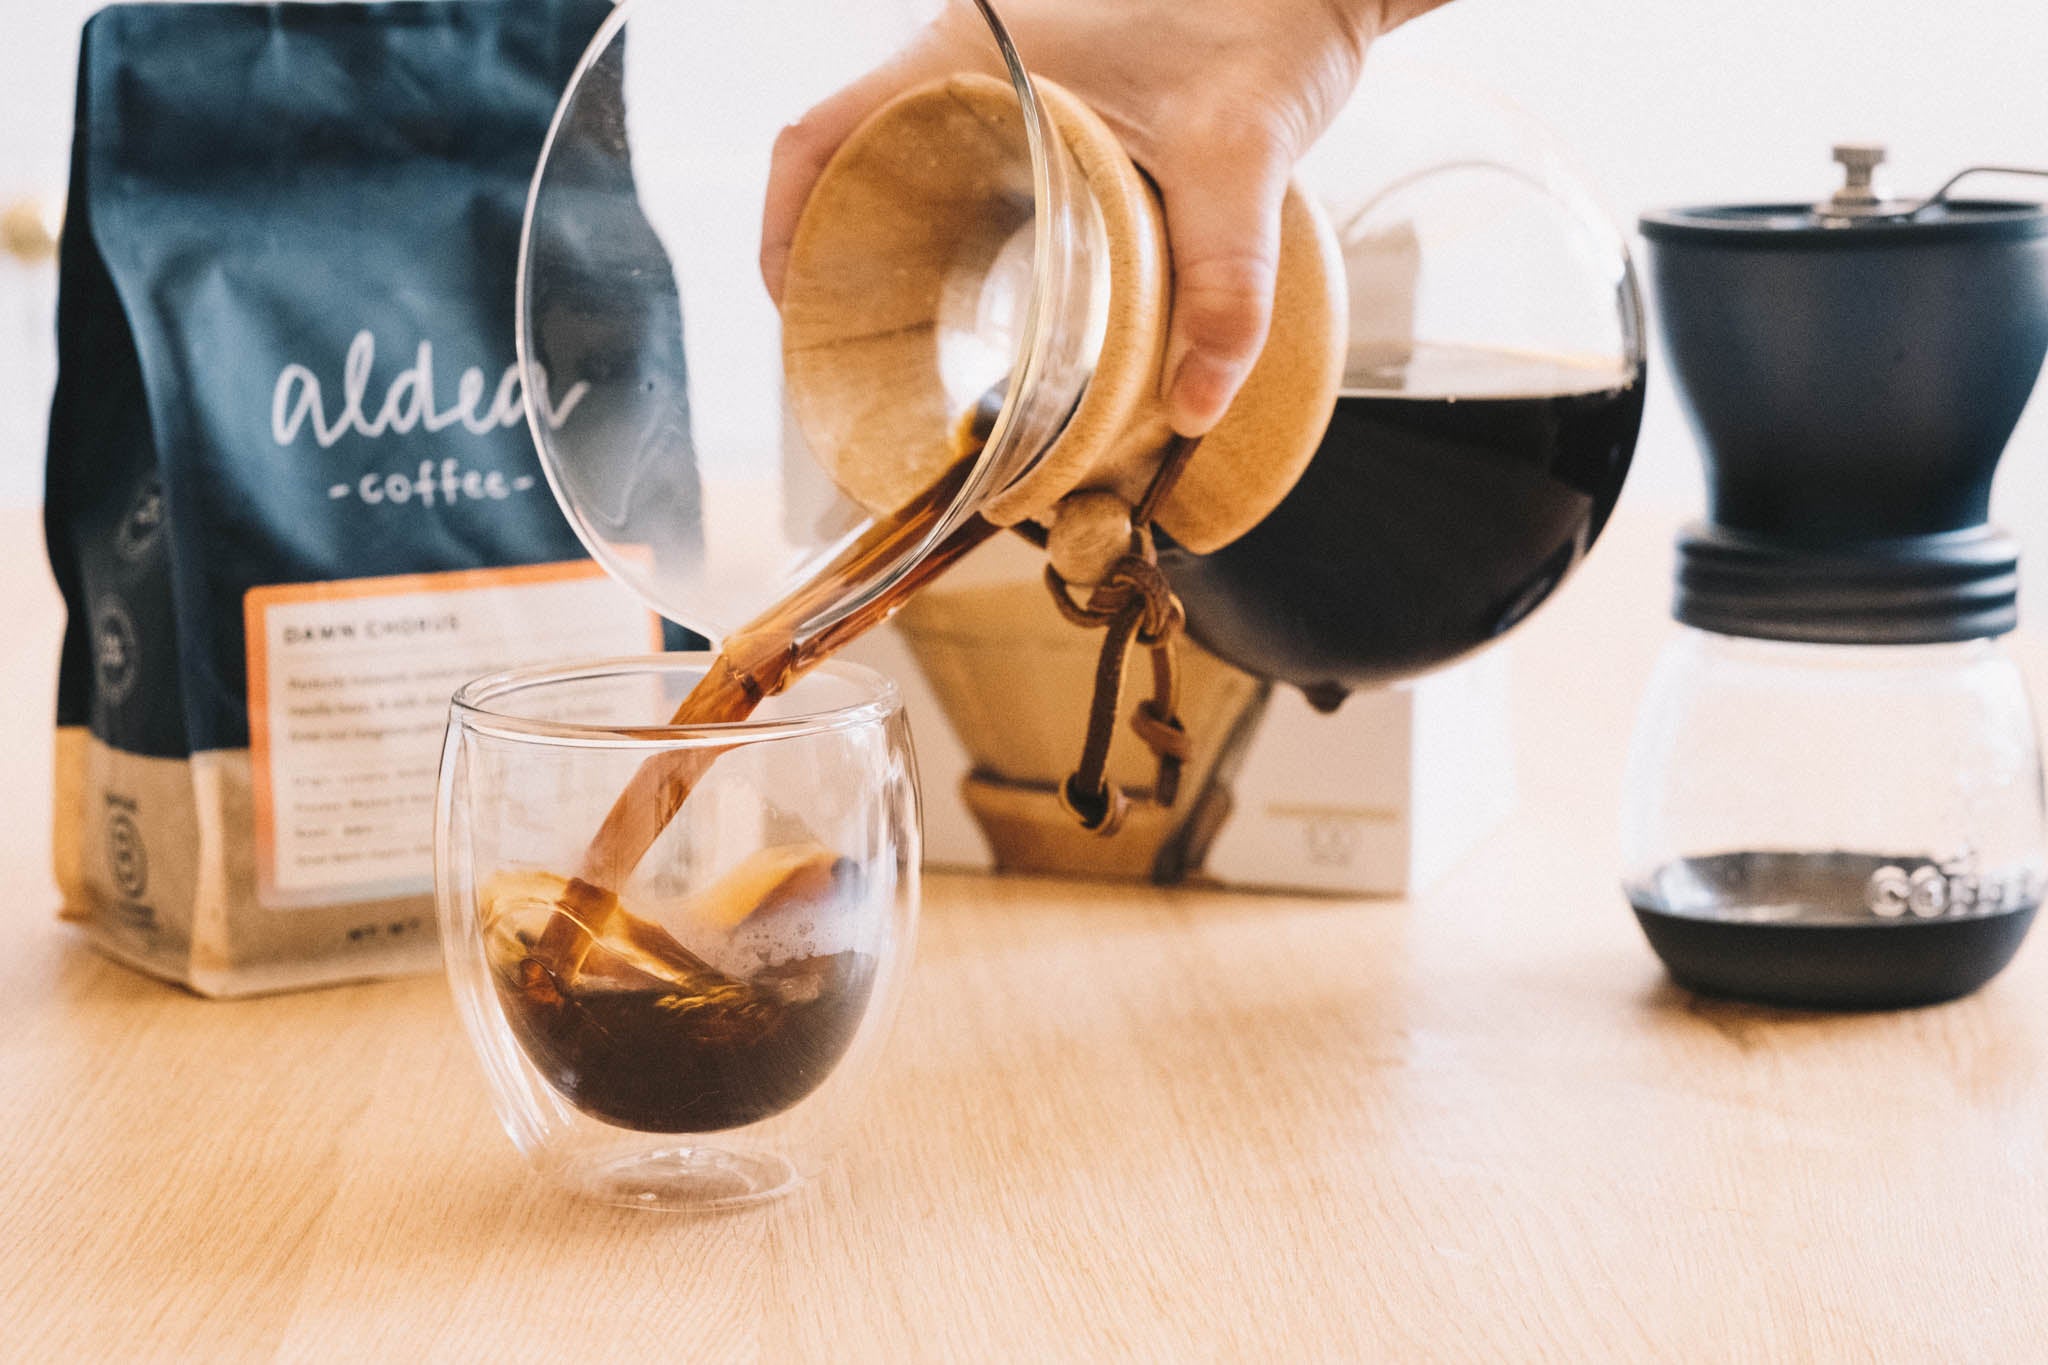 Chemex Brew Guide  Perfect For Two – Kaldi's Coffee